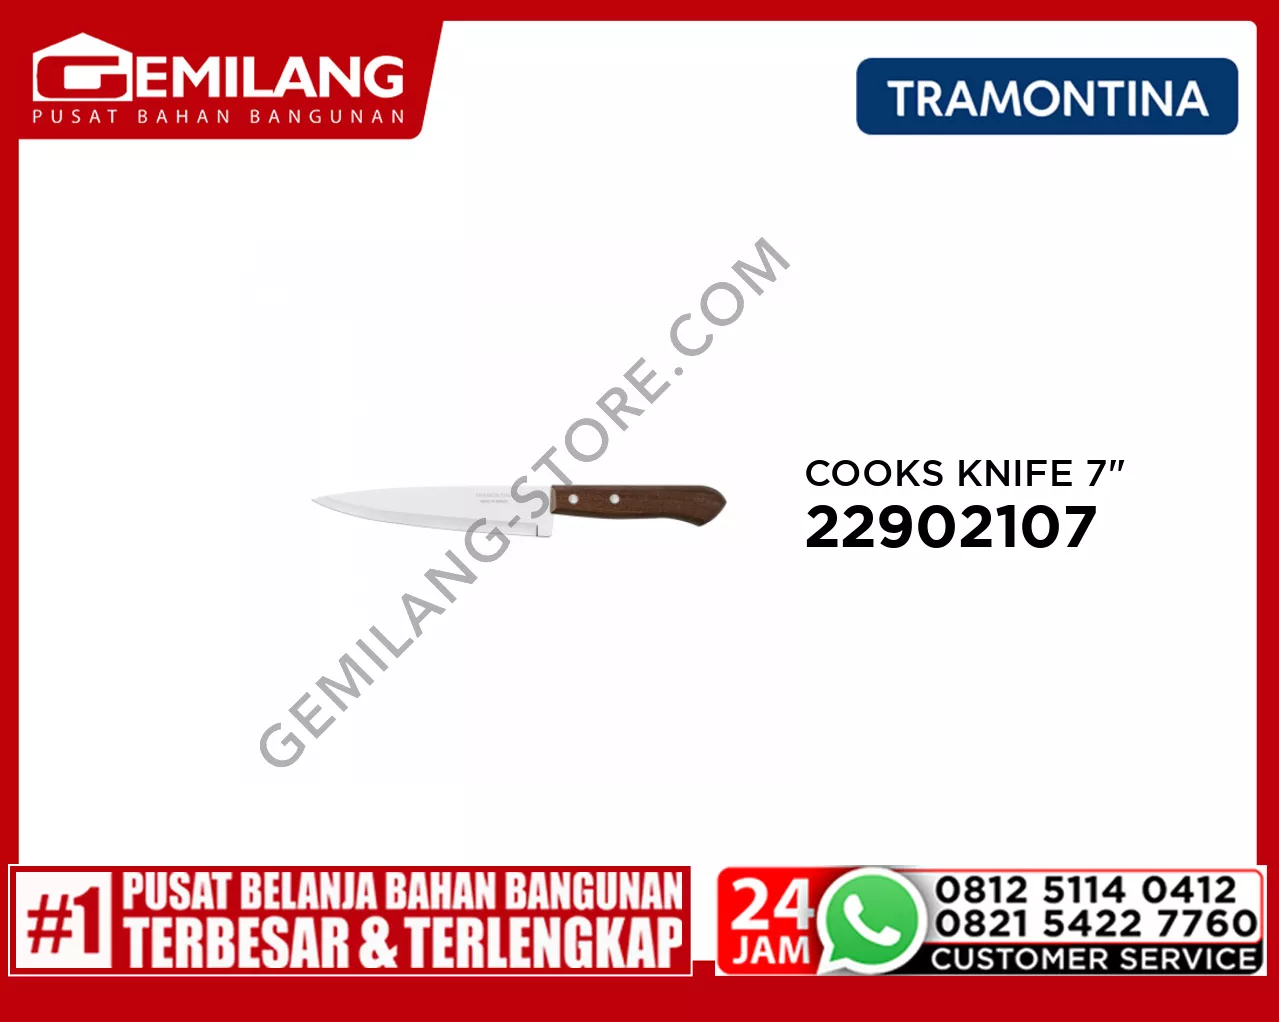 TRAMONTINA DYNAMIC COOKS KNIFE TRAMON 22902107 7inch